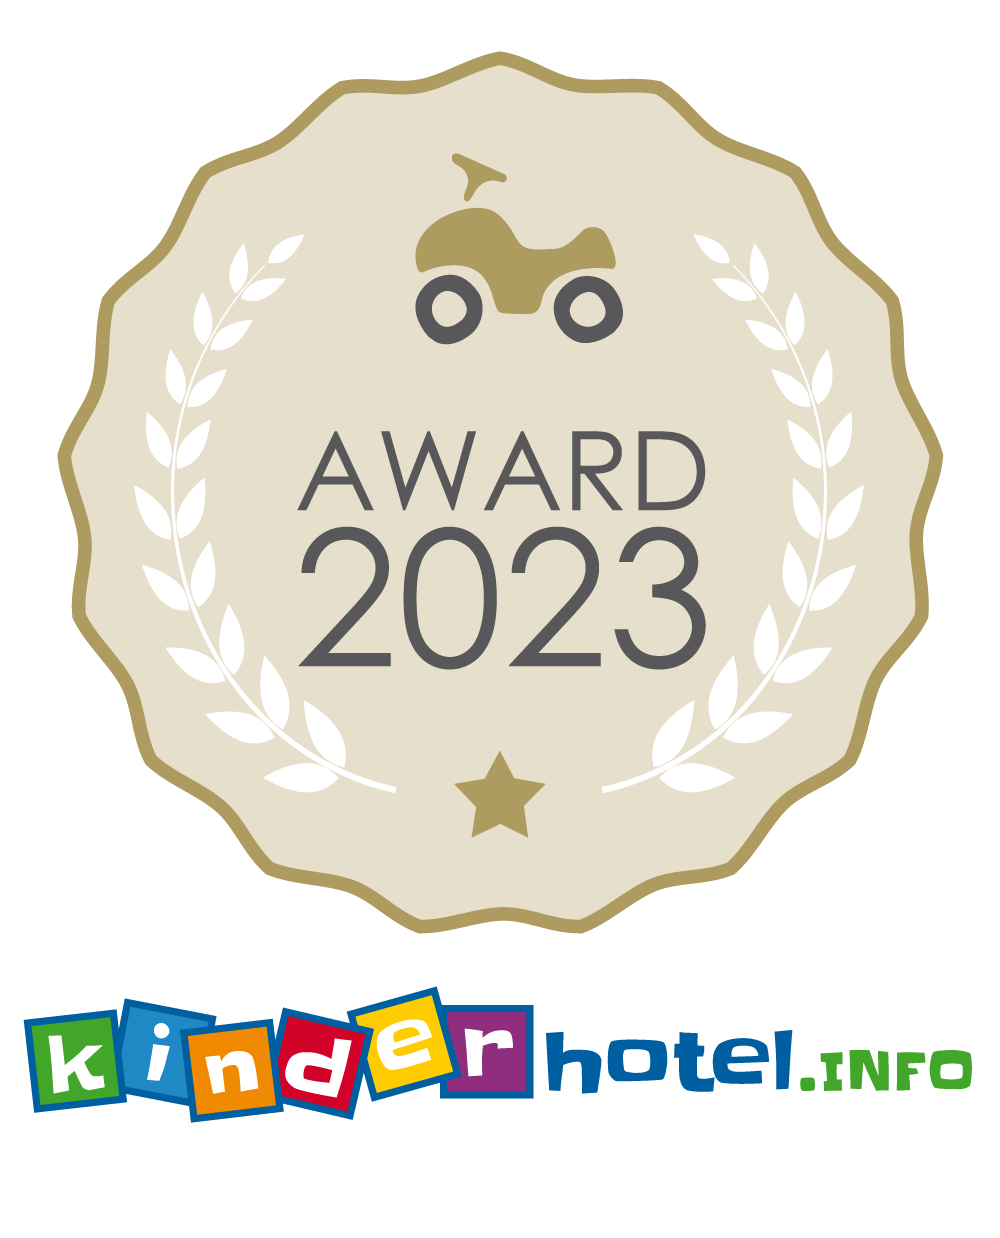 Kinderhotel.info Award 2023